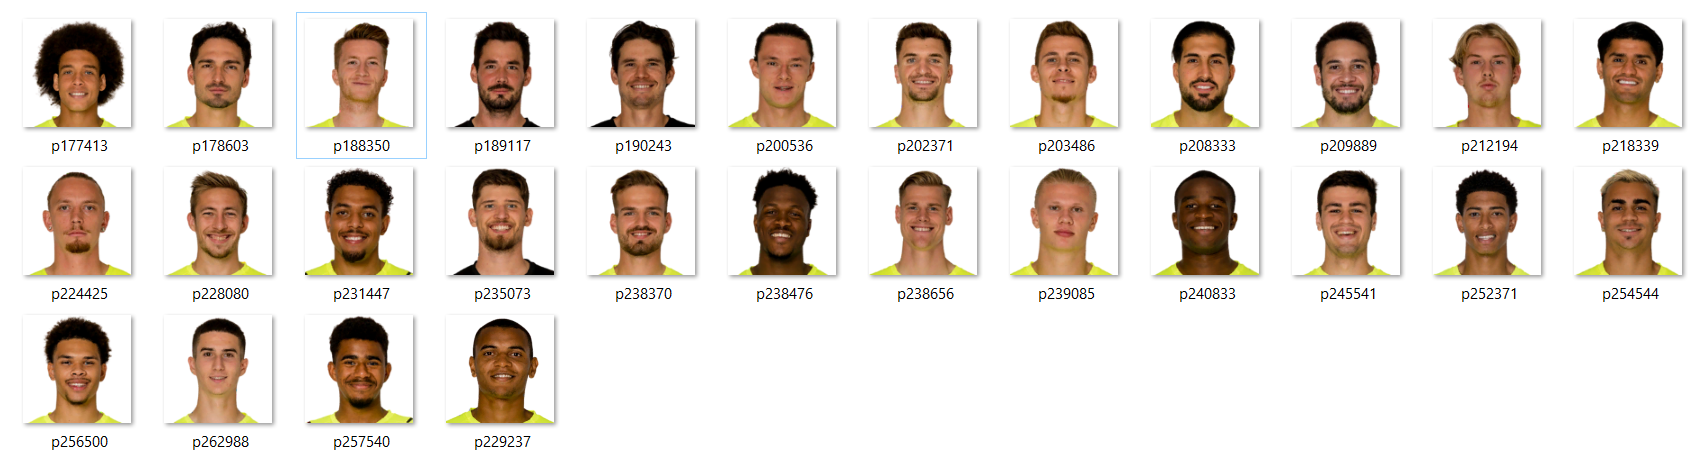 Borussia Dortmund Miniface.png